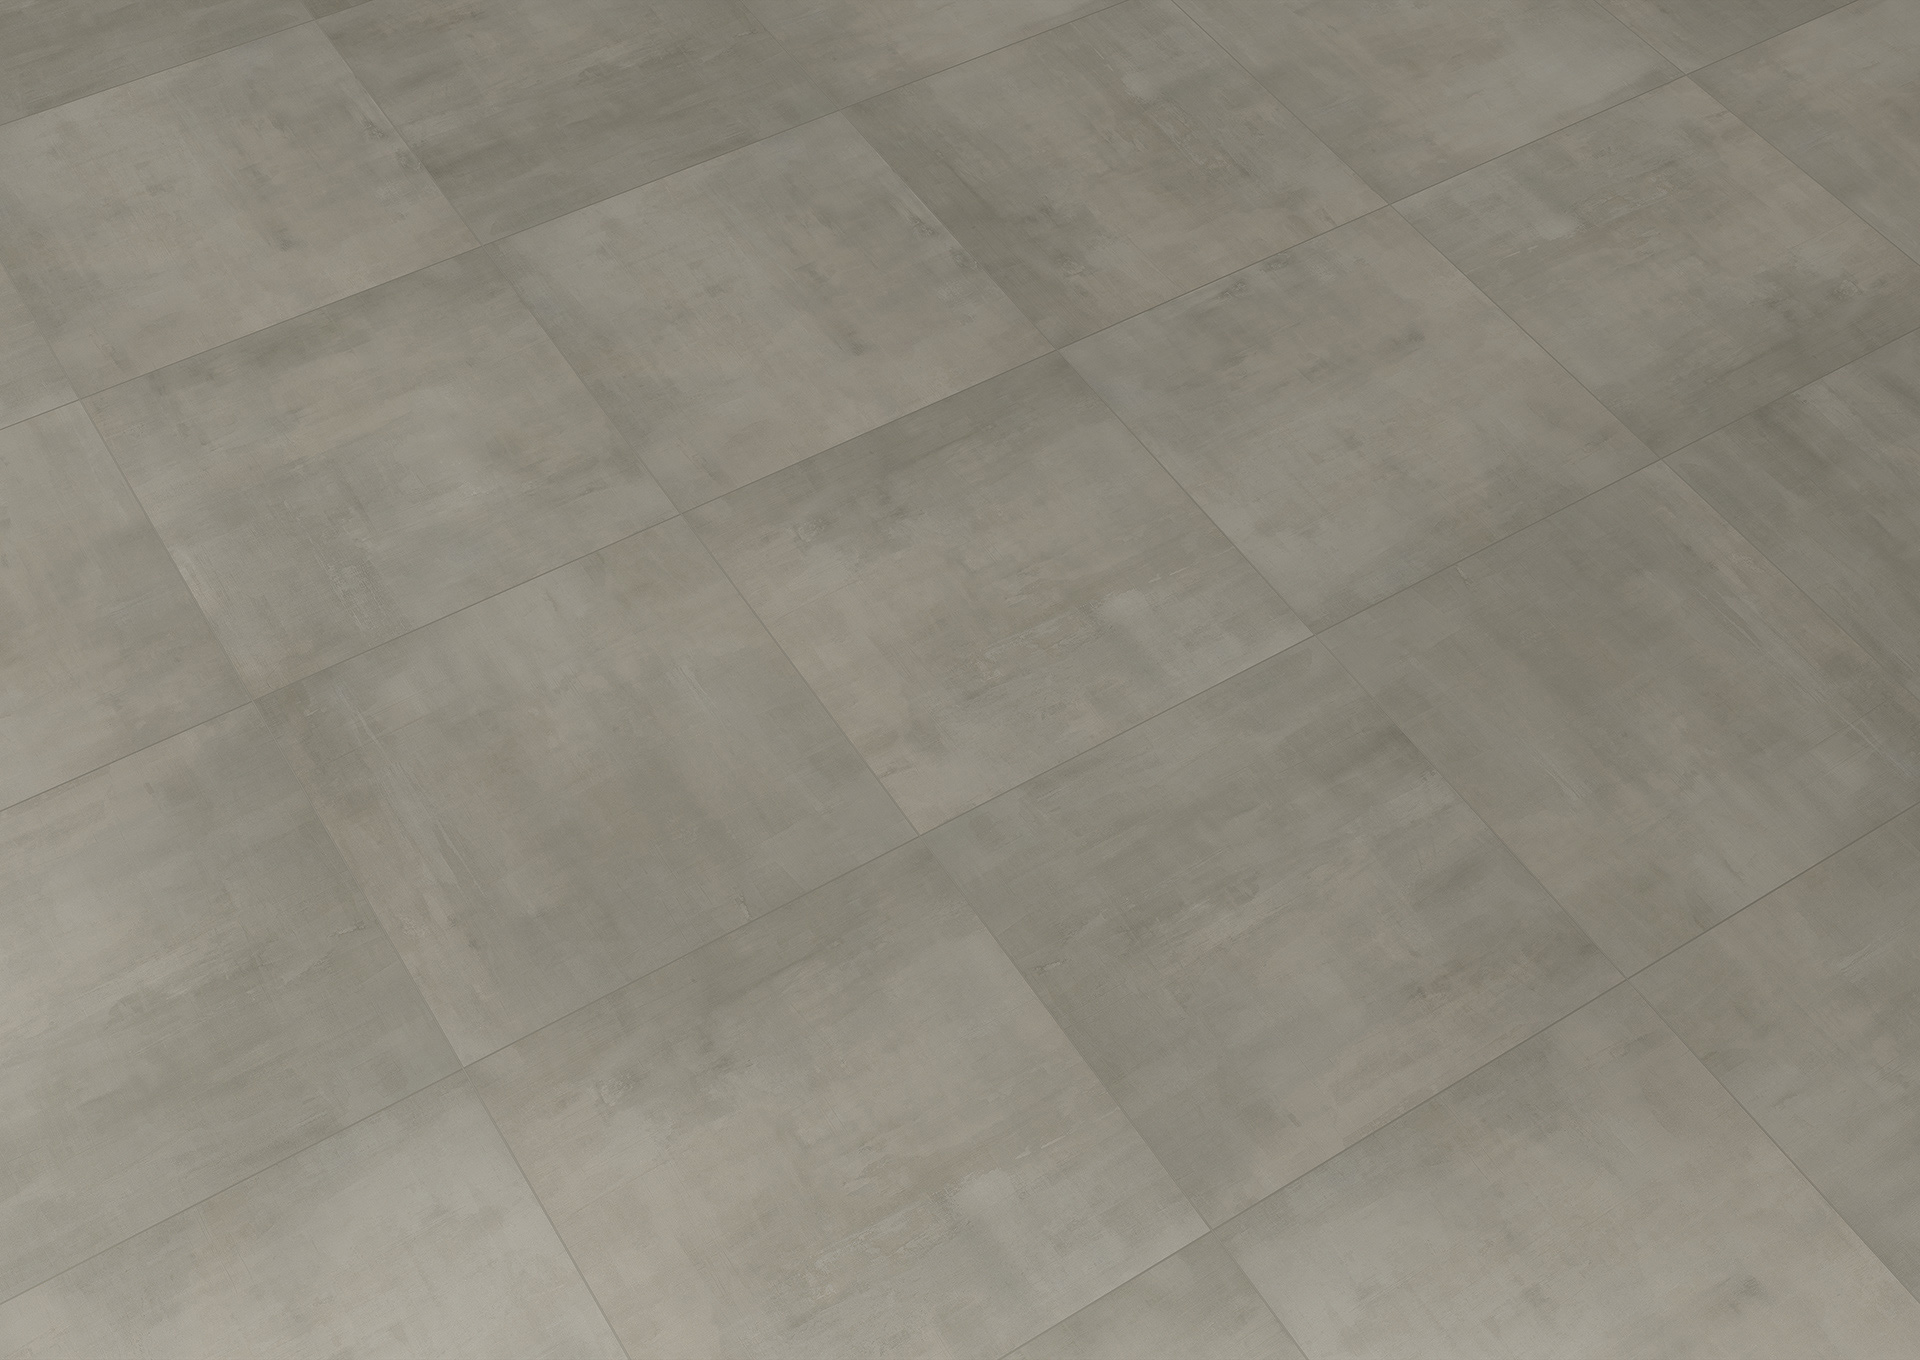 Rover grey 60x60 flooring